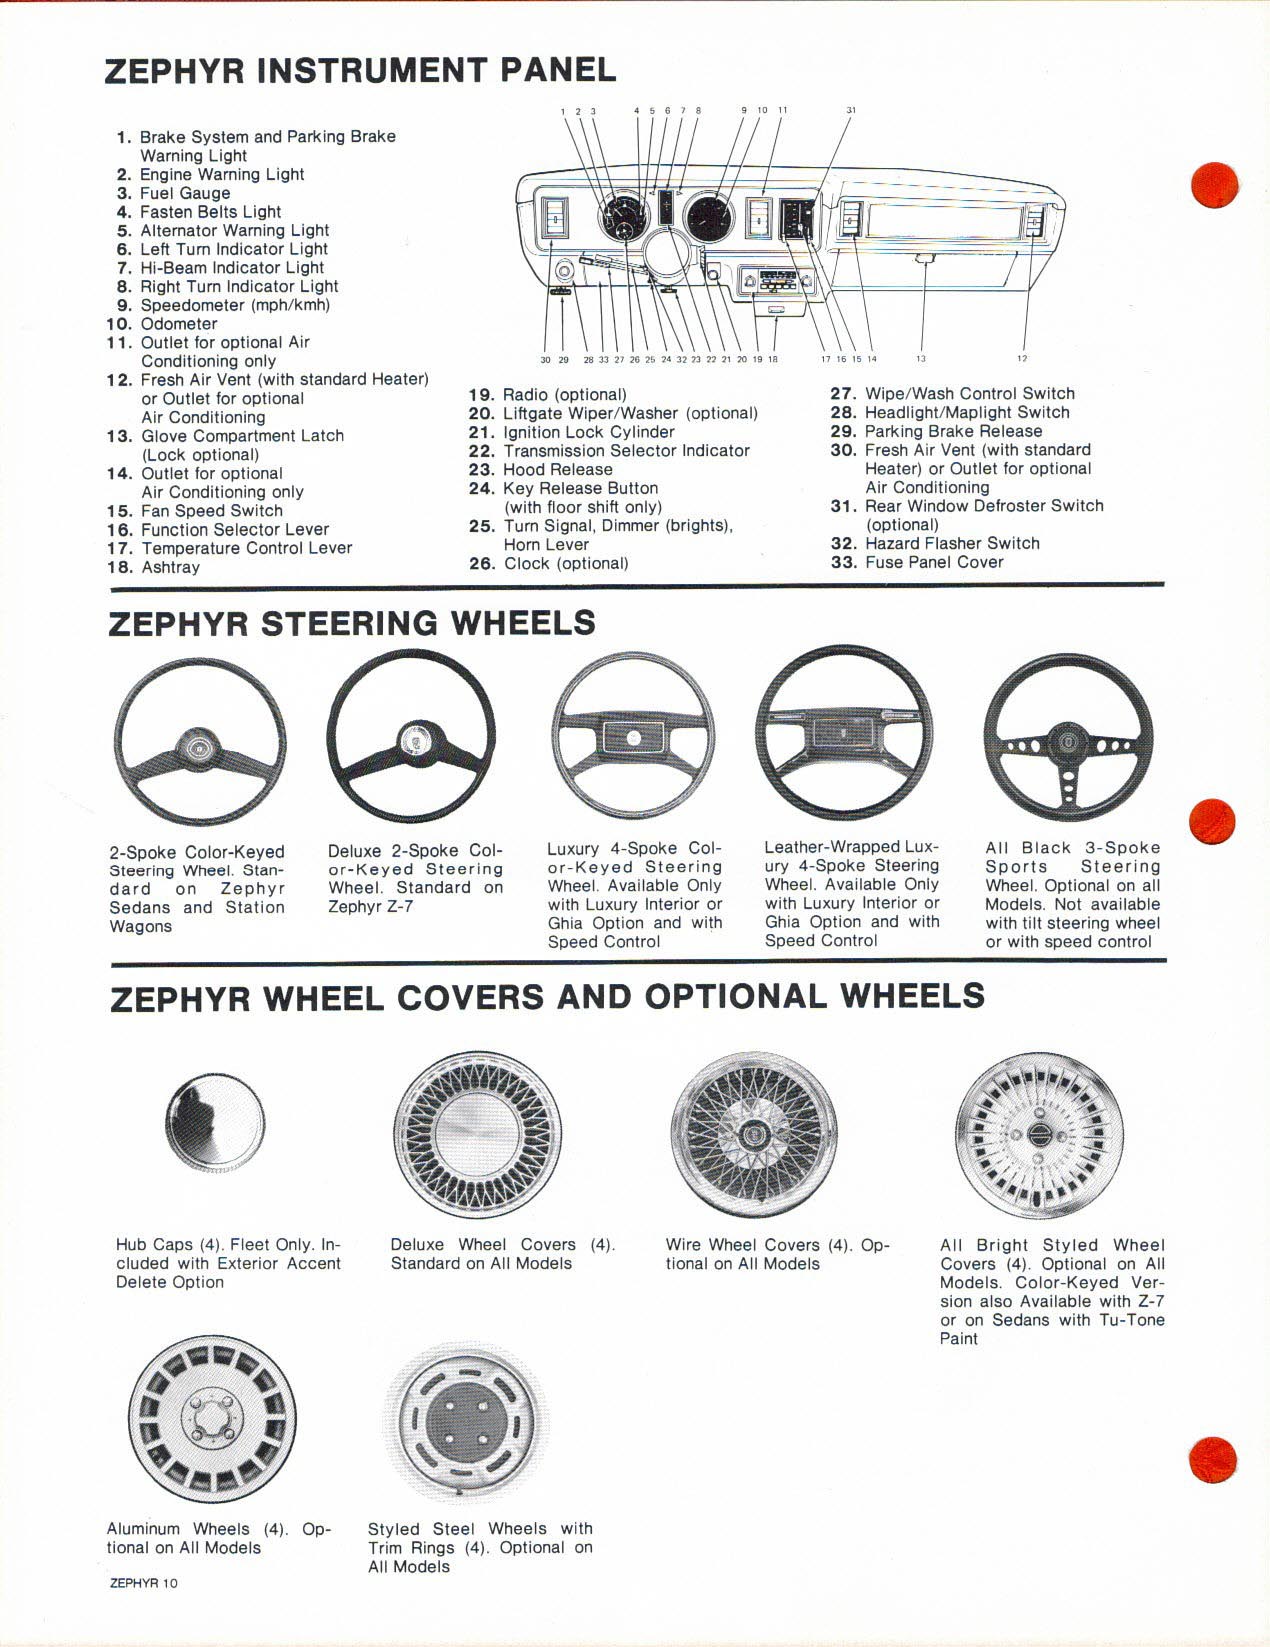 1980 Mercury Zephyr Facts-10